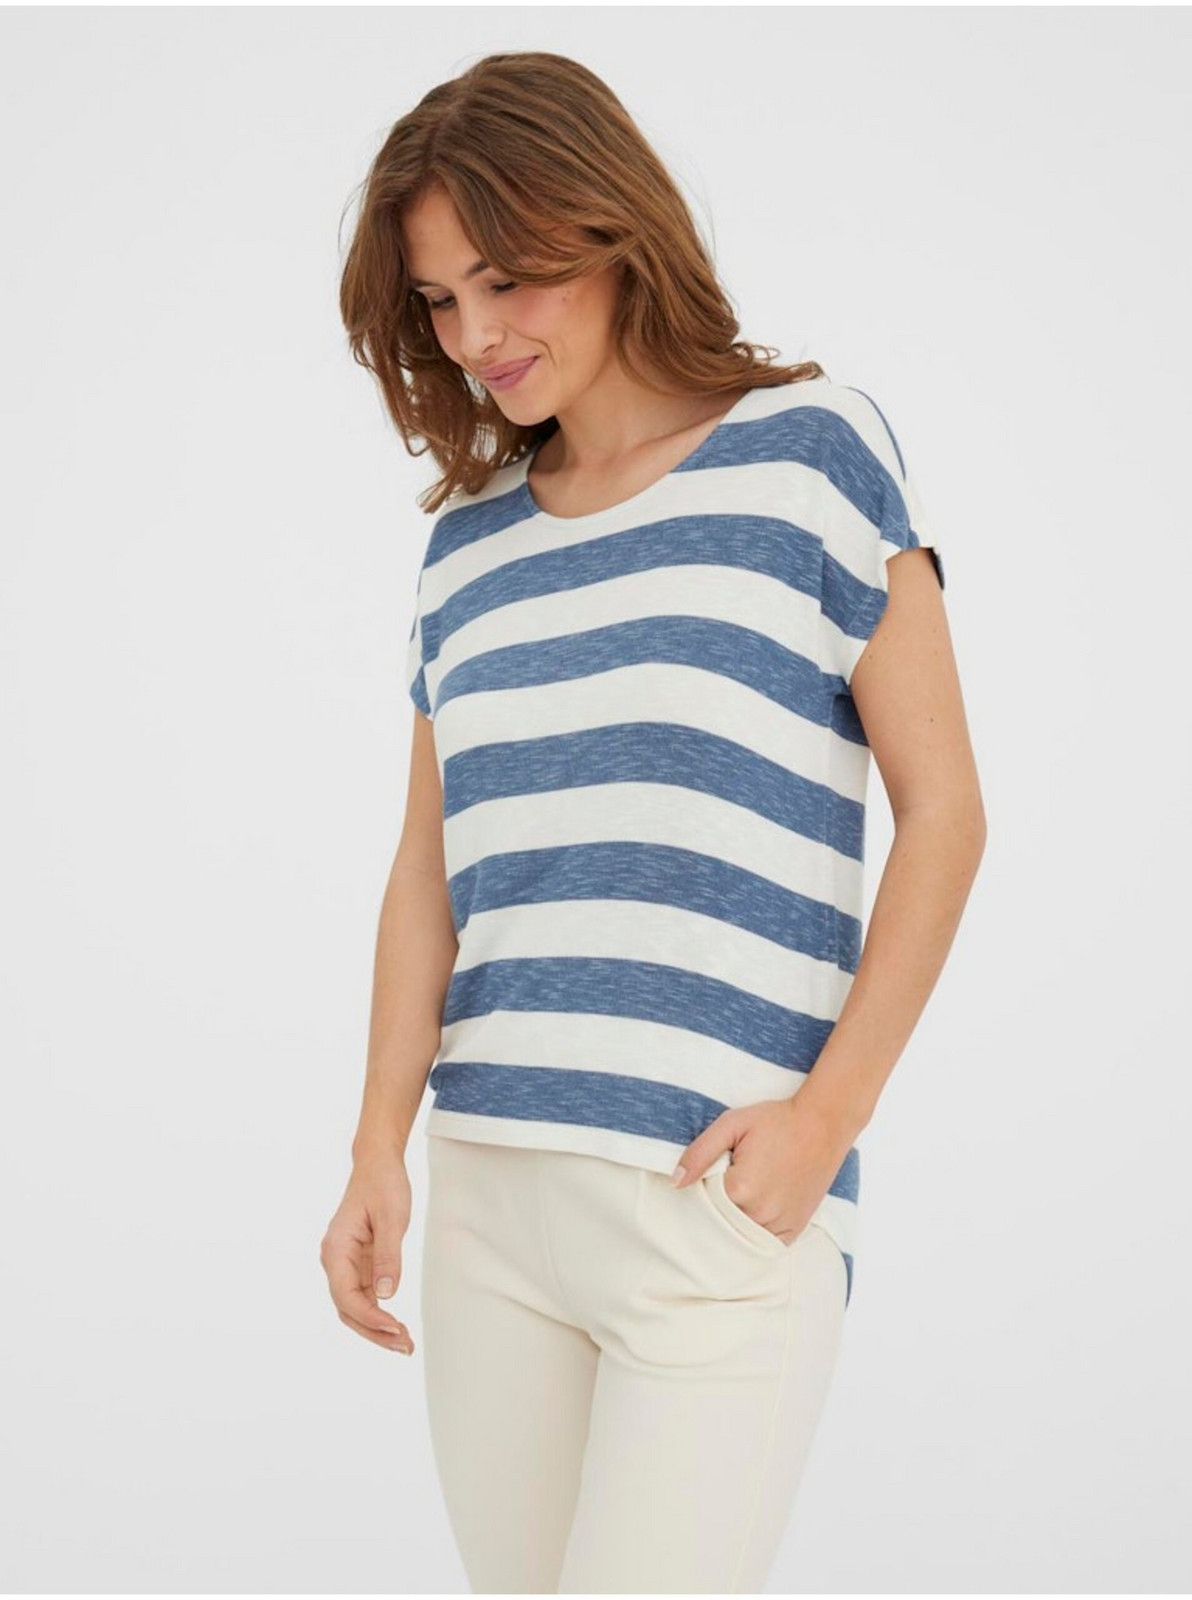 Modro-bílé pruhované tričko VERO MODA Wide Stripe - Dámské